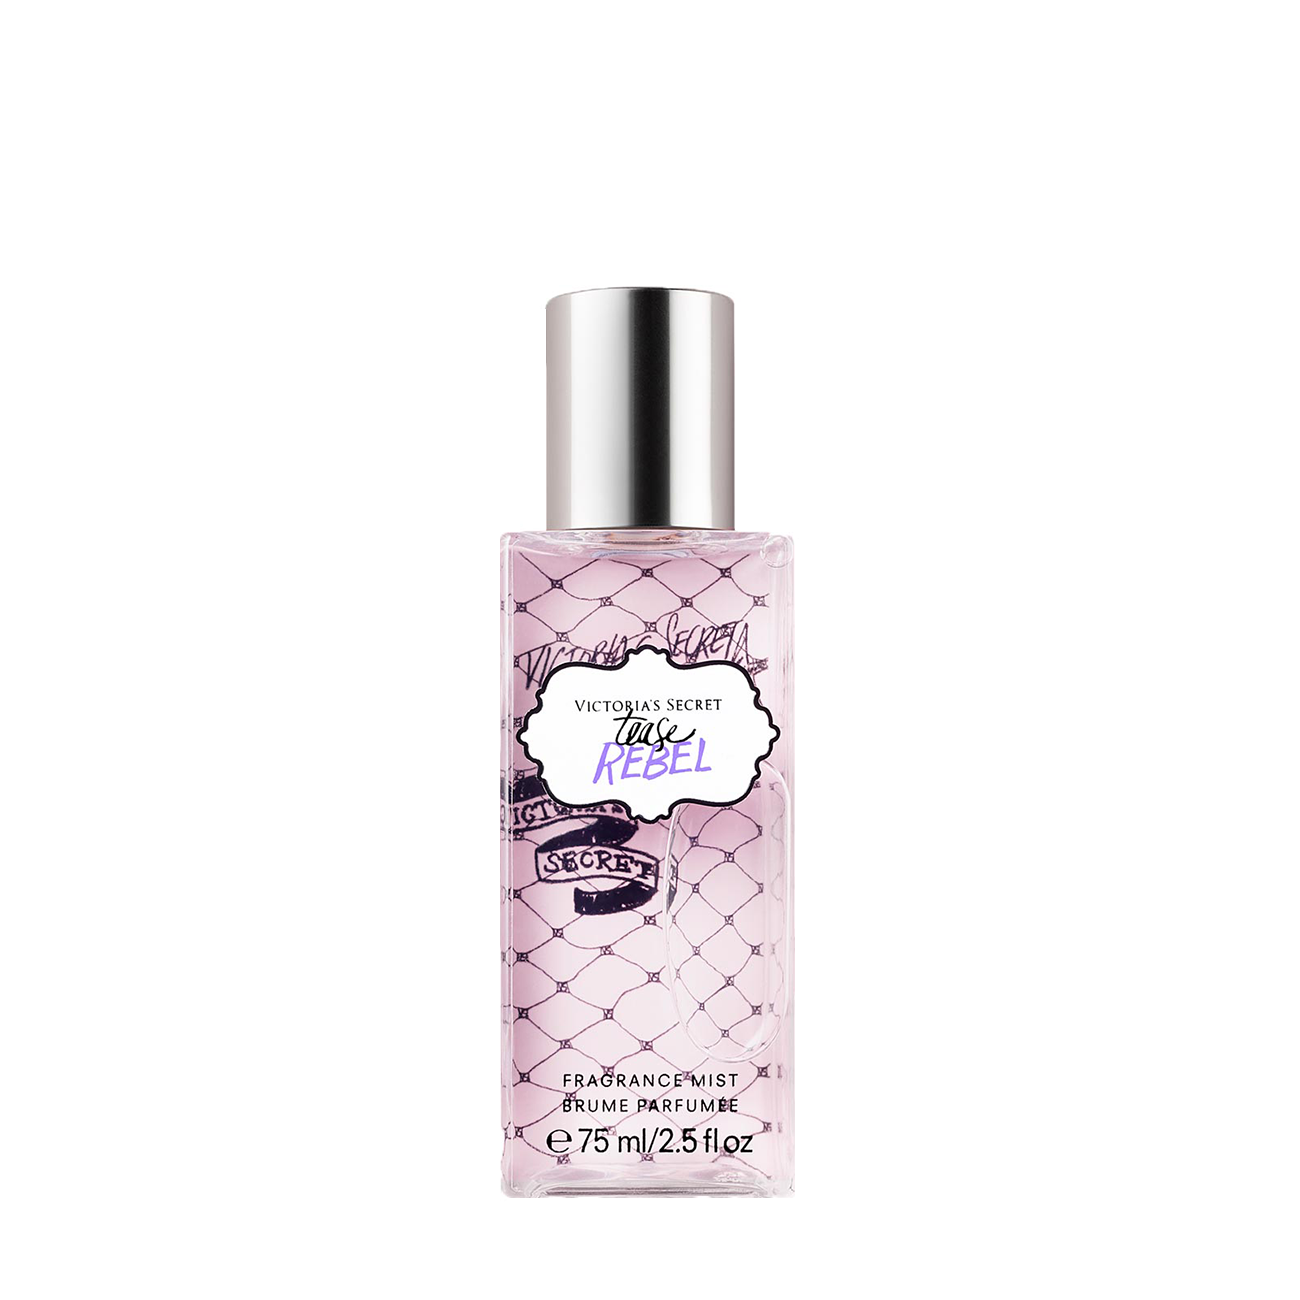 Spray de corp Victoria’s Secret TEASE REBEL FRAGRANCE MIST 75ml cu comanda online